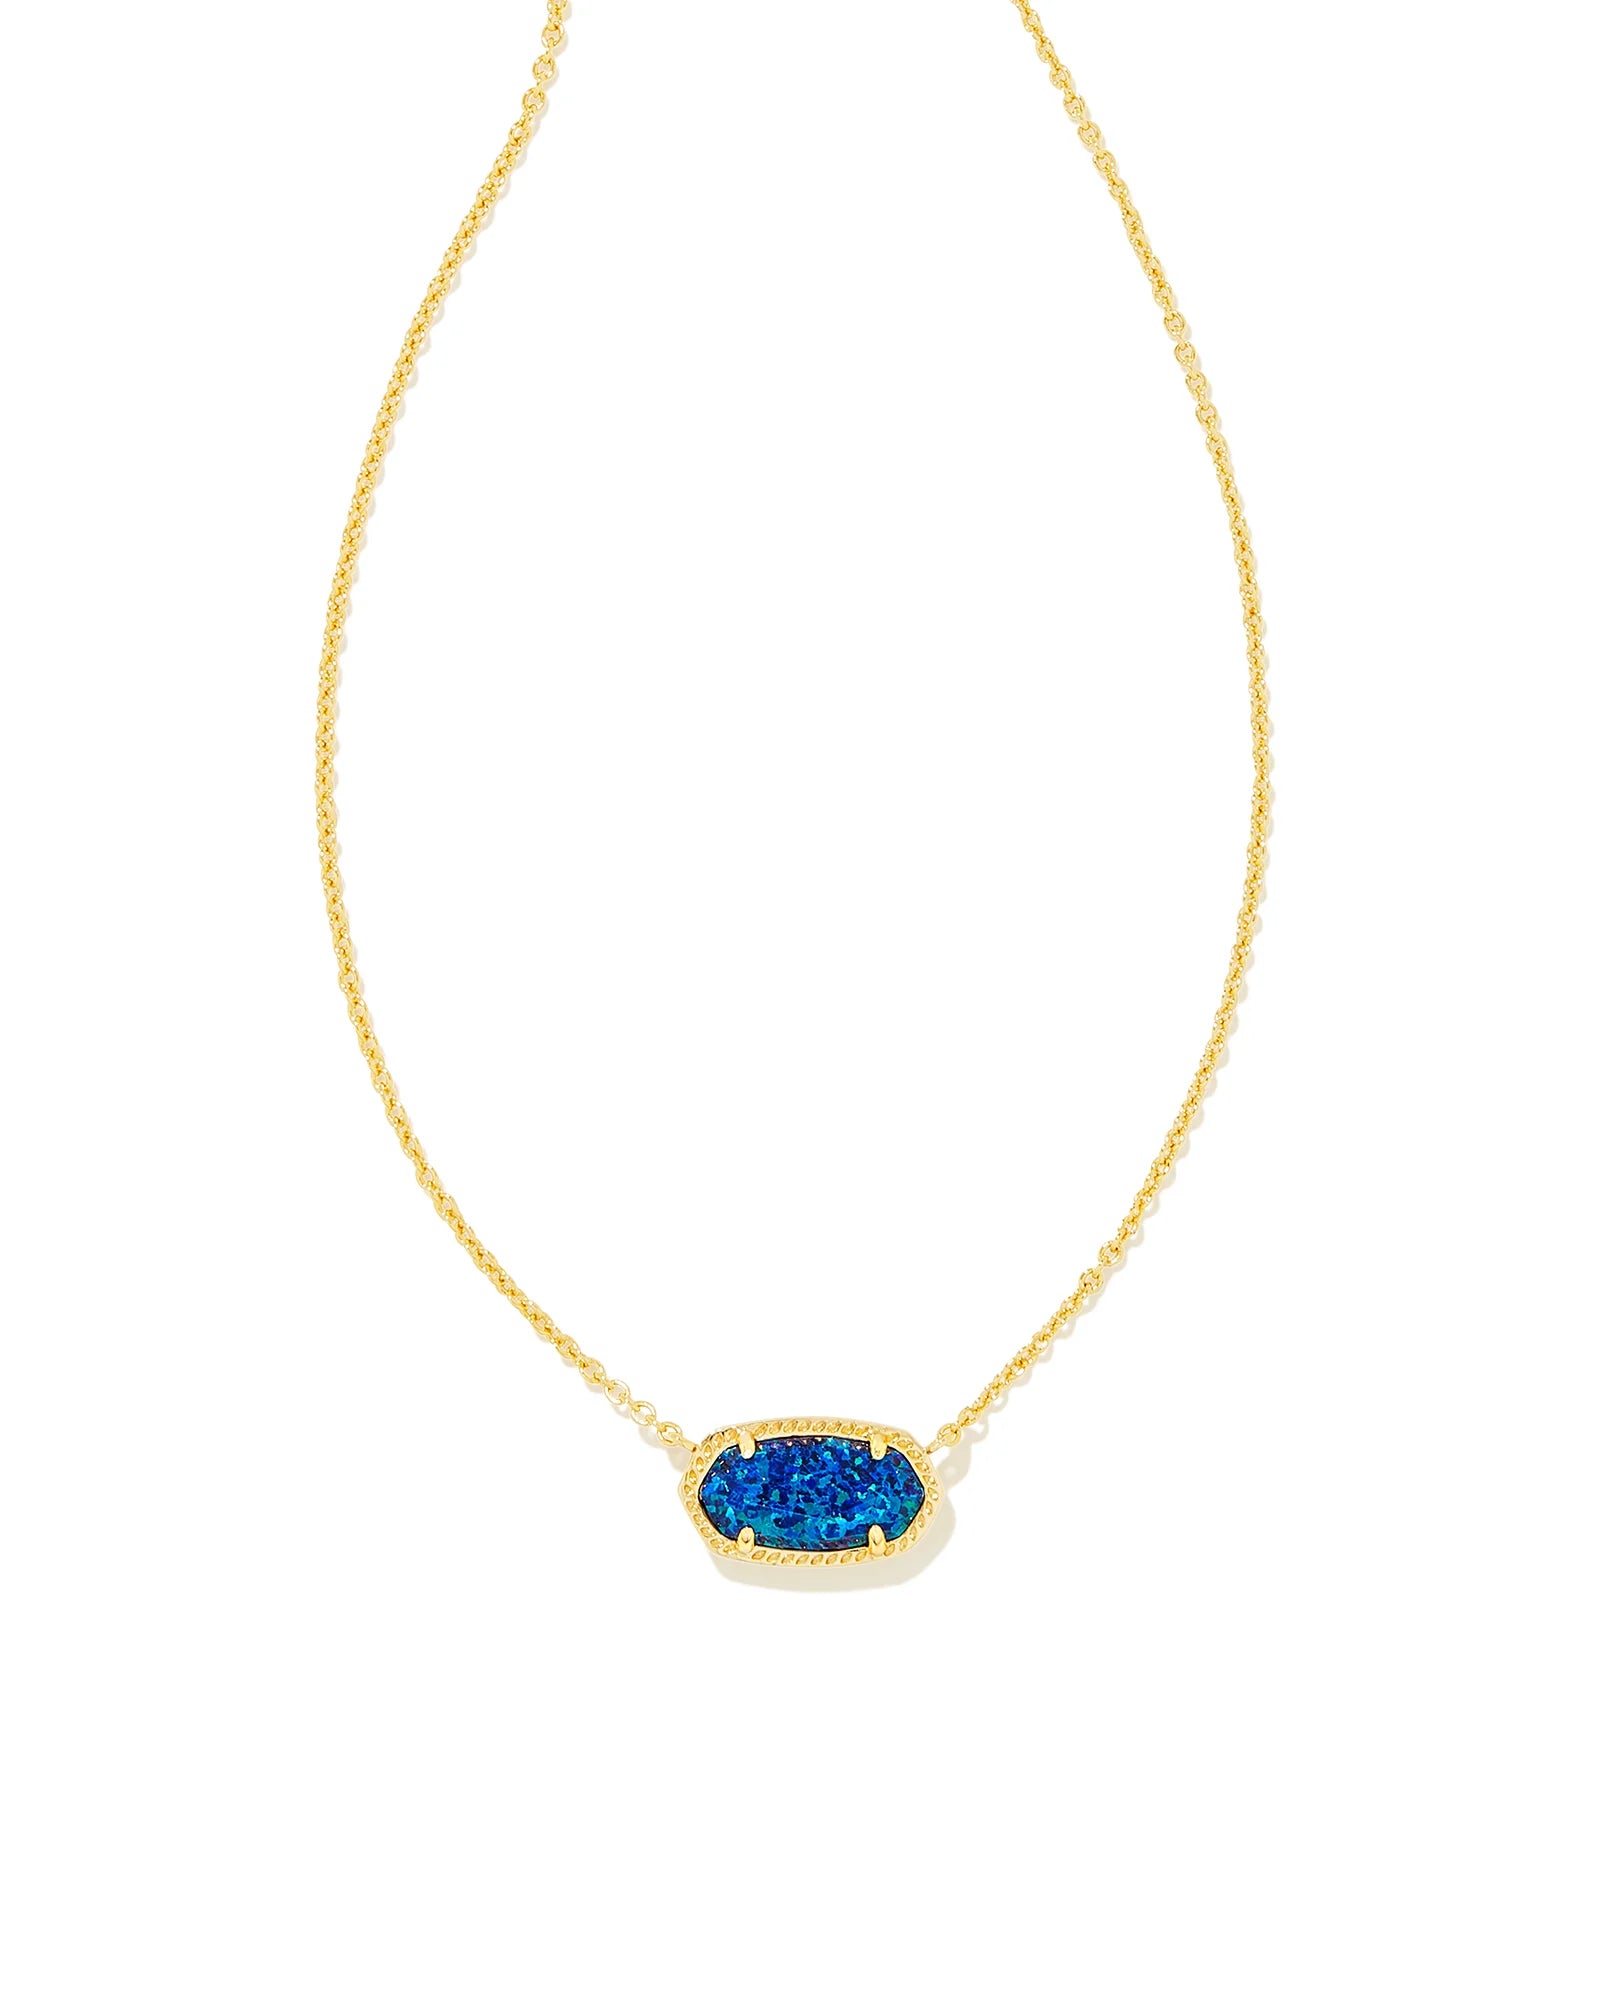 KENDRA SCOTT- Elisa Gold Pendant Necklace in Cobalt Blue Opal